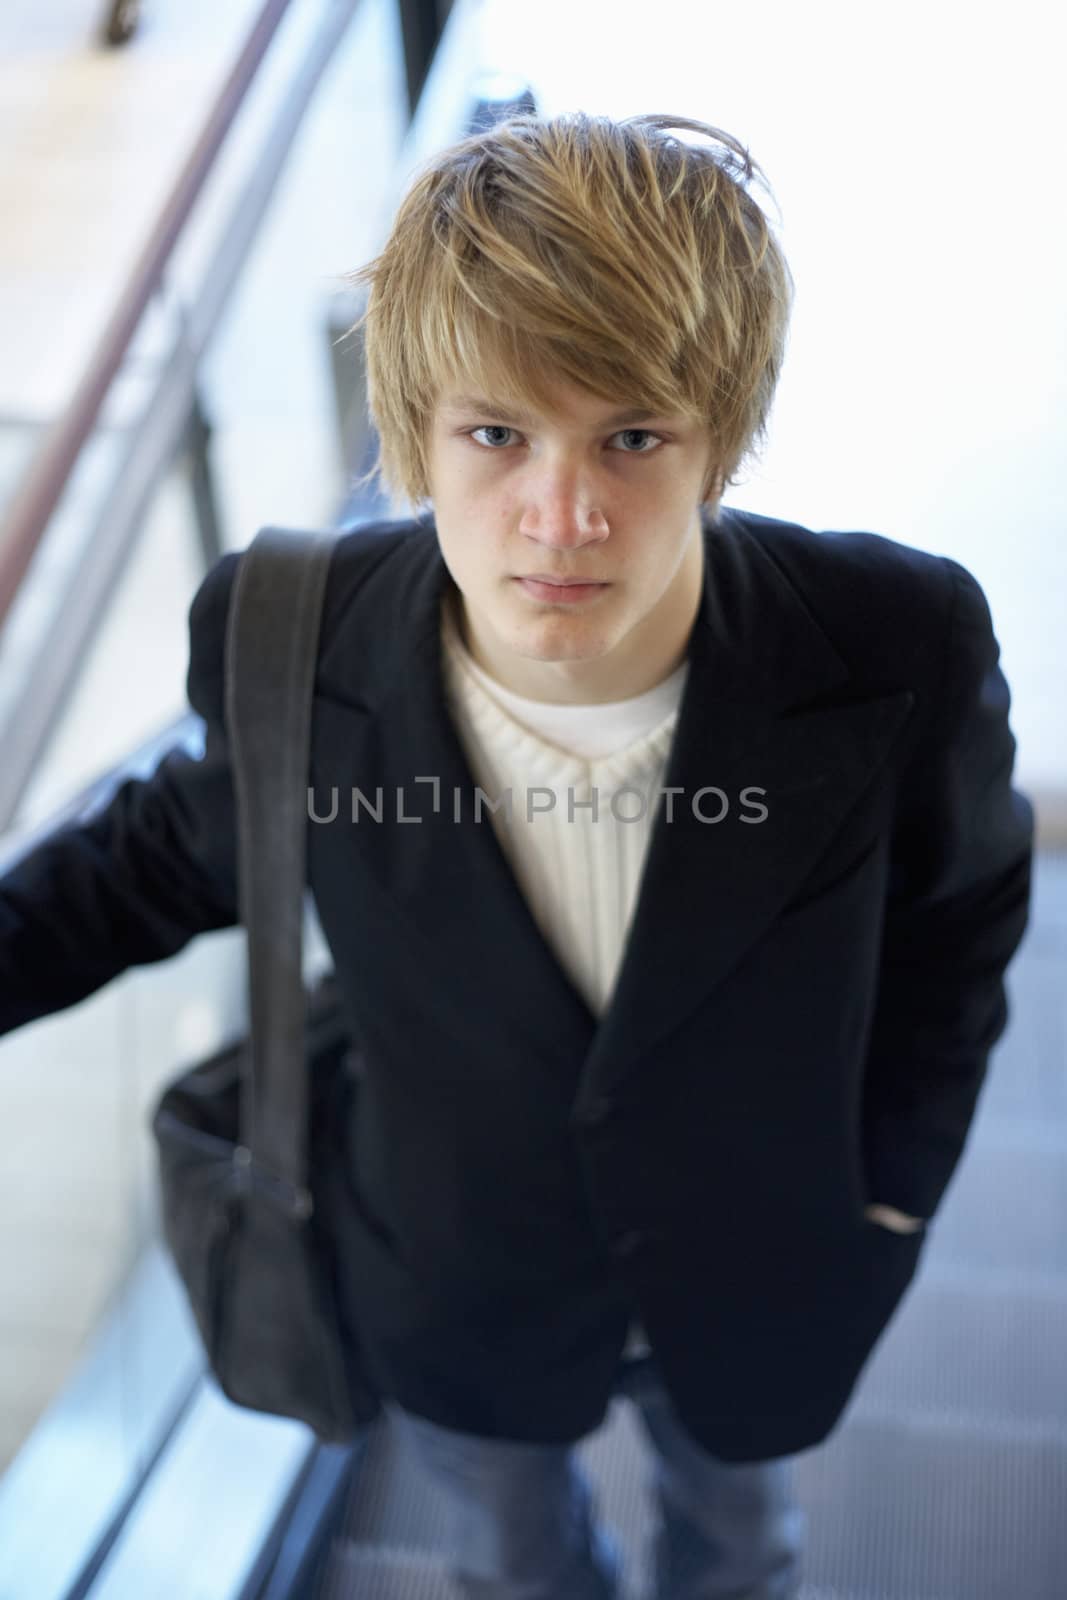 Interior shot of teenage boy standing in escalator